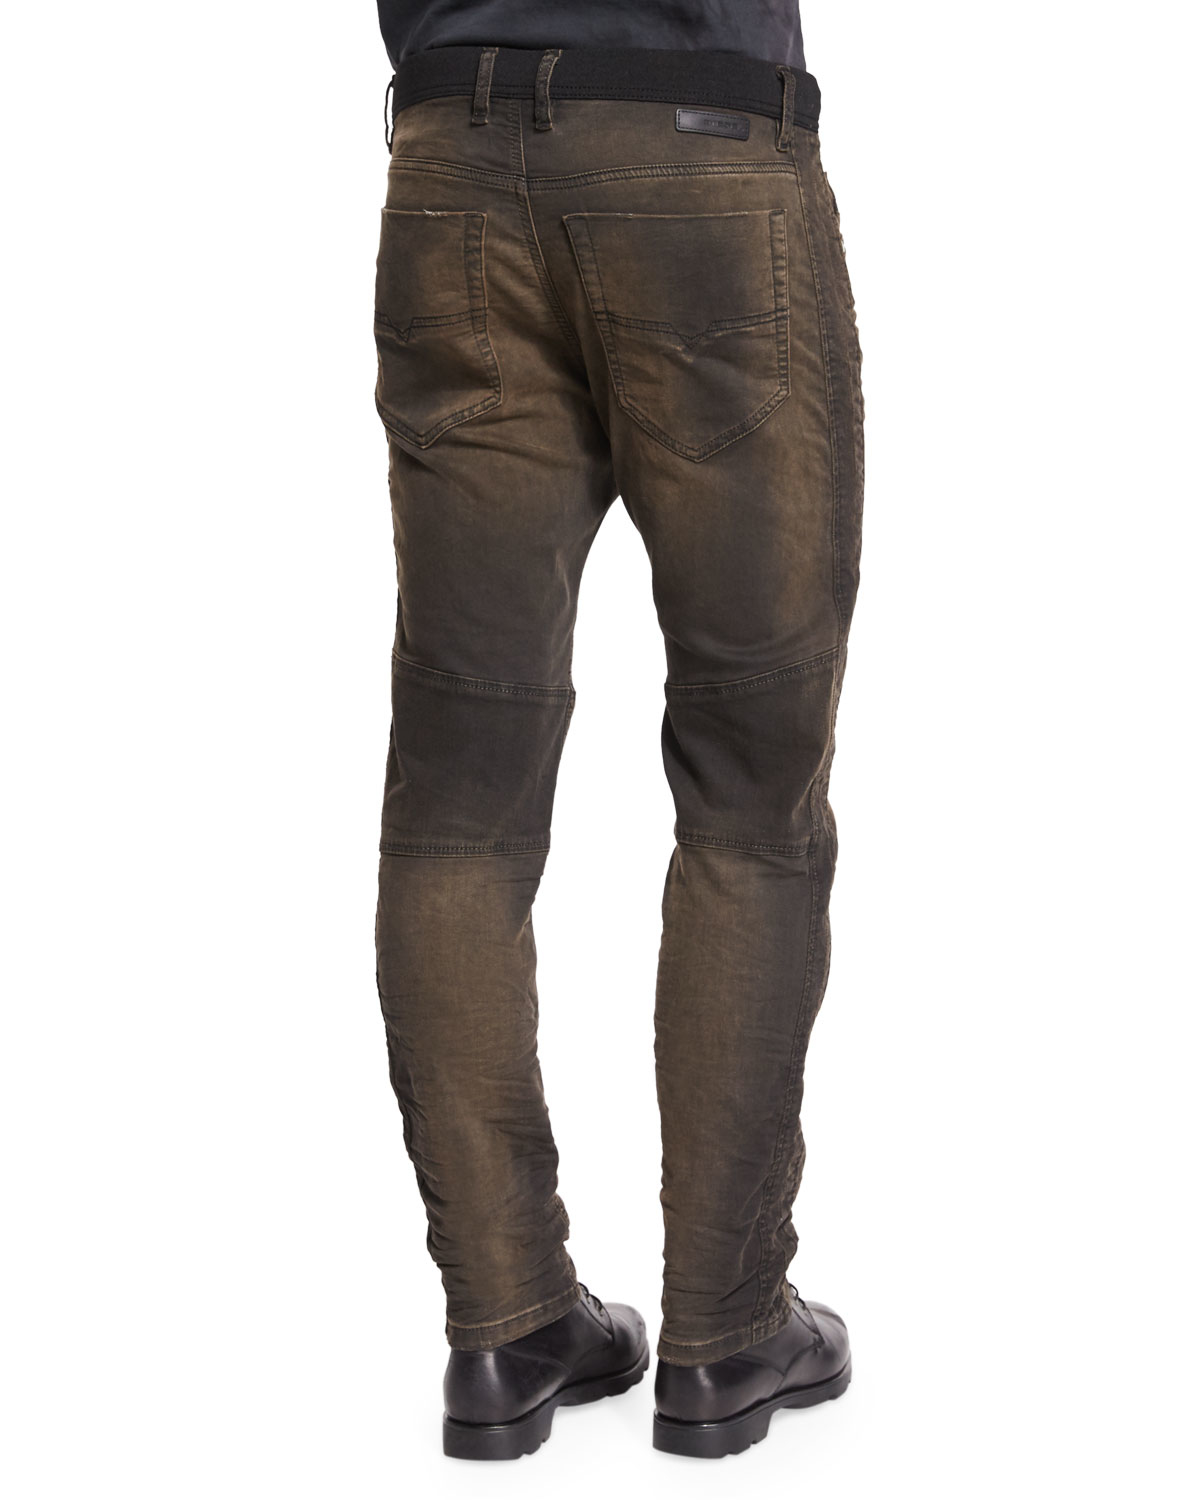 DIESEL Narrot Dirty Brown Moto Jogger Jeans in Brown for Men - Lyst